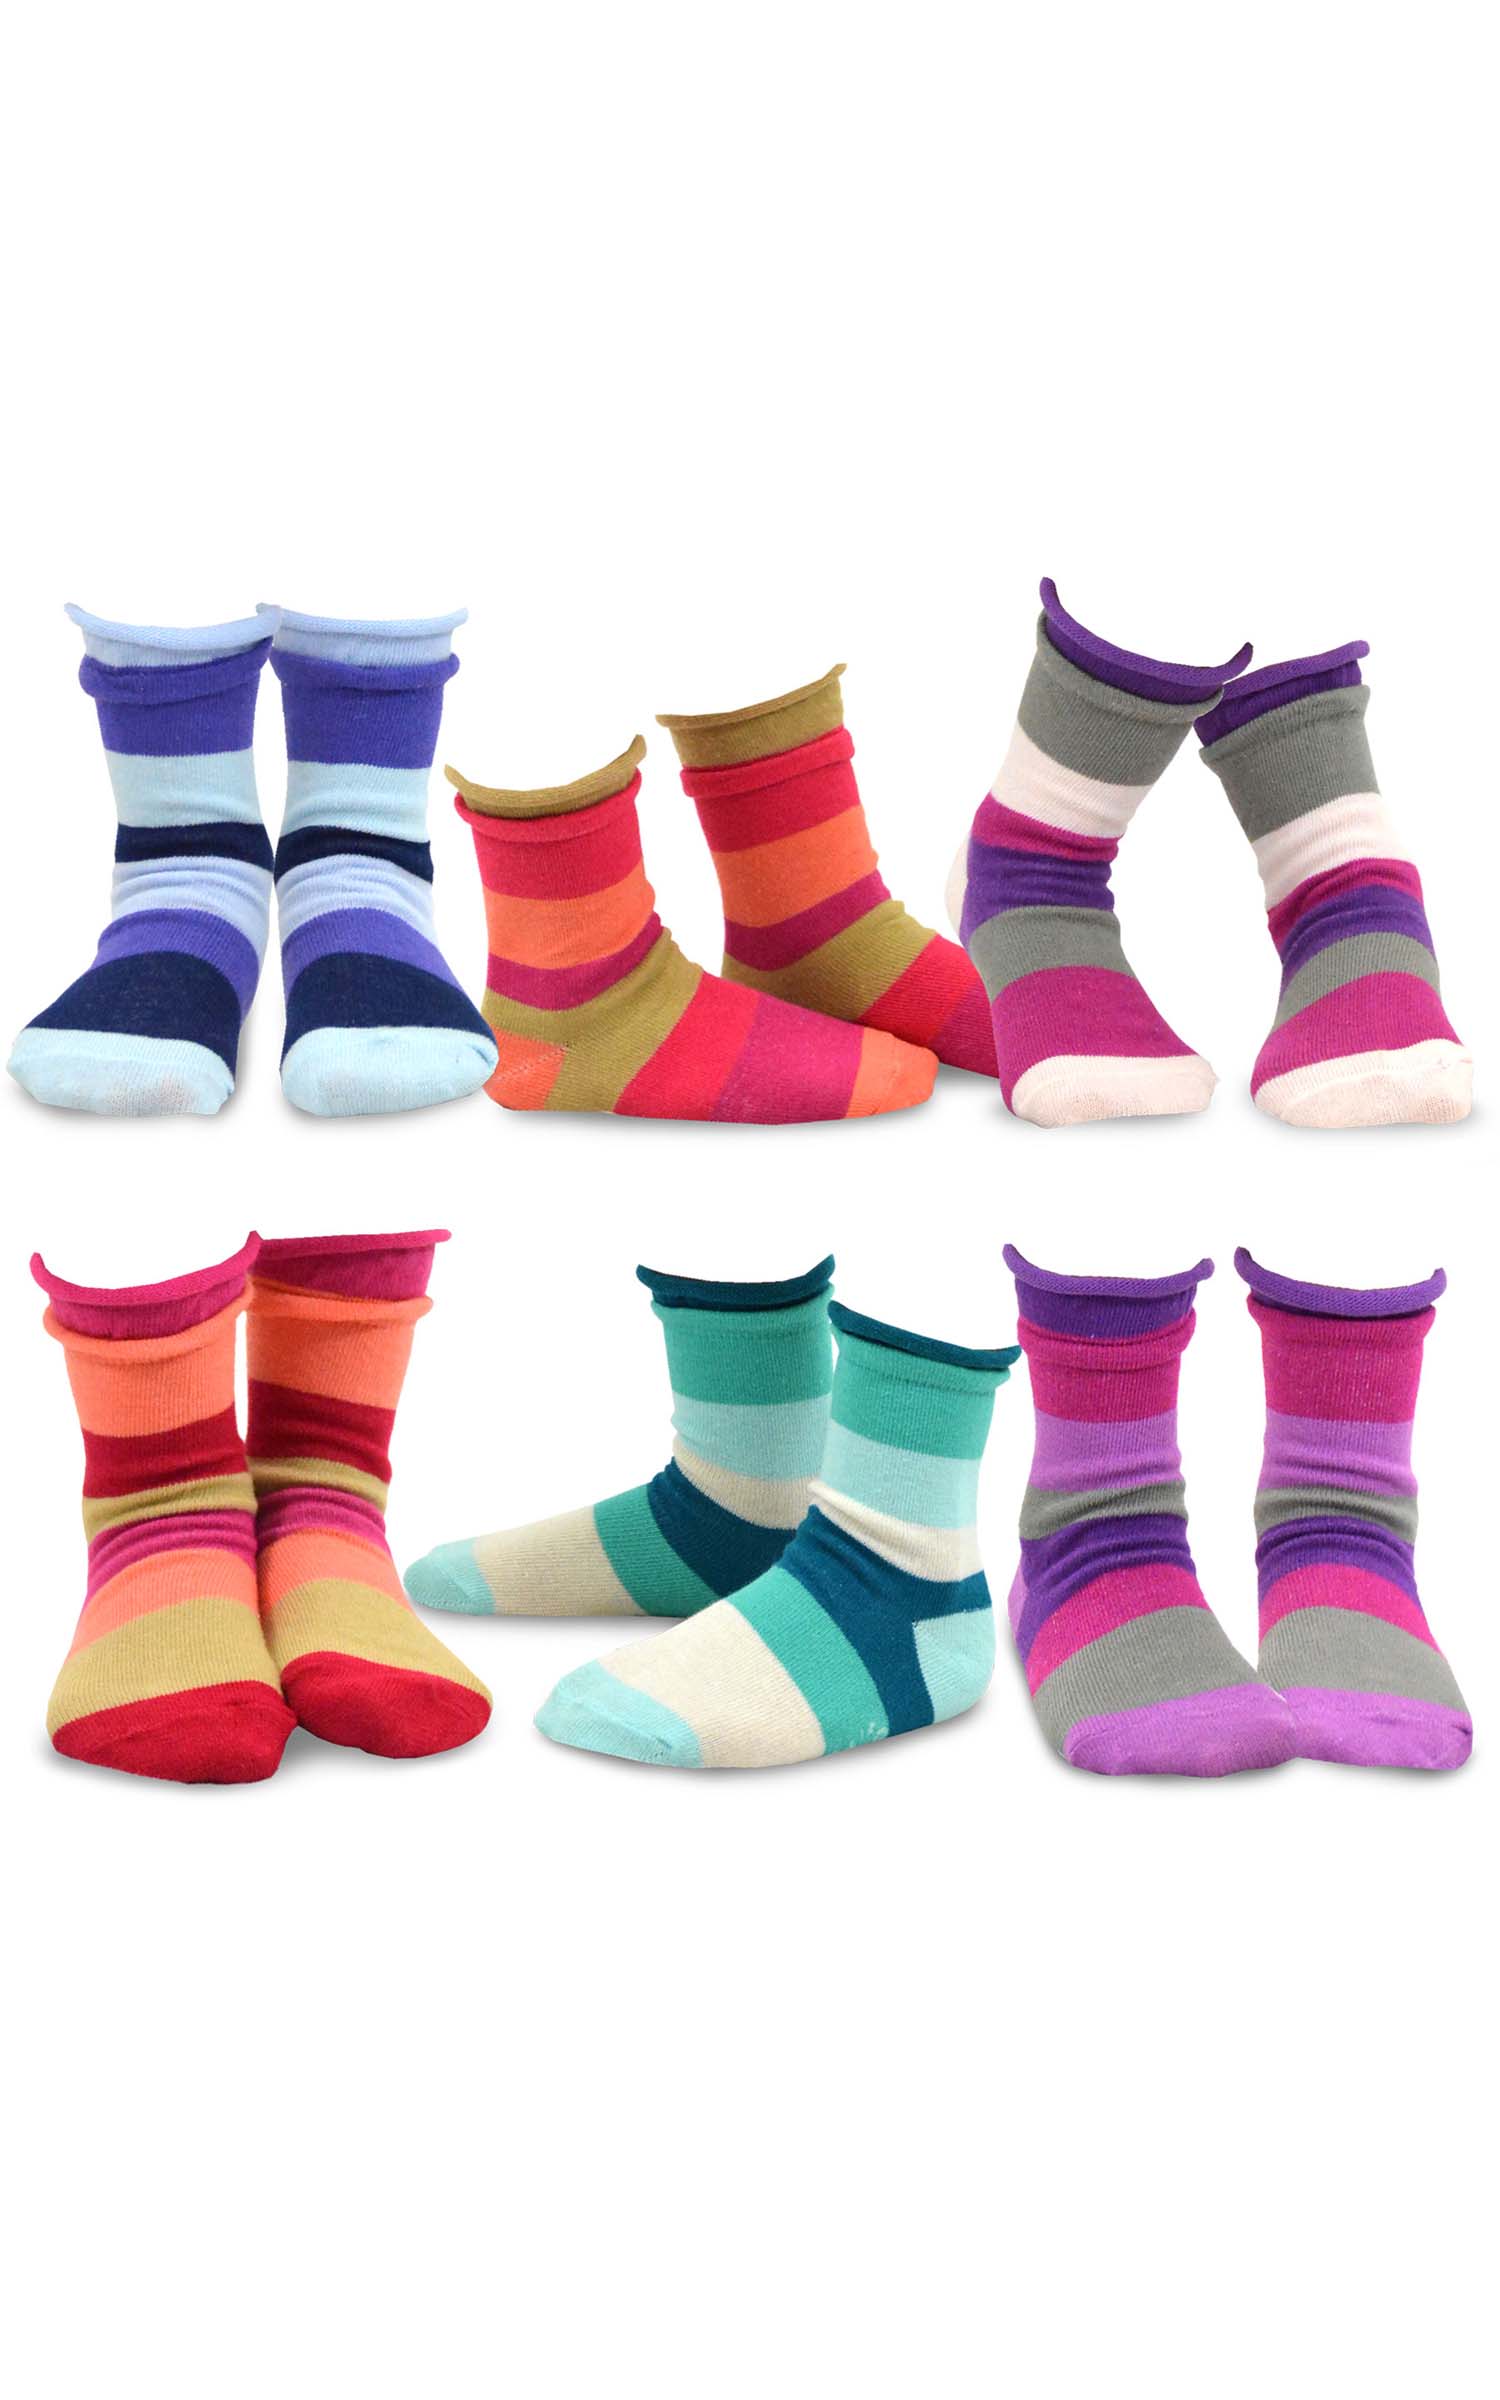 TeeHee Little Kids Girls Cotton Crew Basic Roll Top Socks 6 Pair Pack (9-10 Years, Indian Stripe) - image 1 of 7